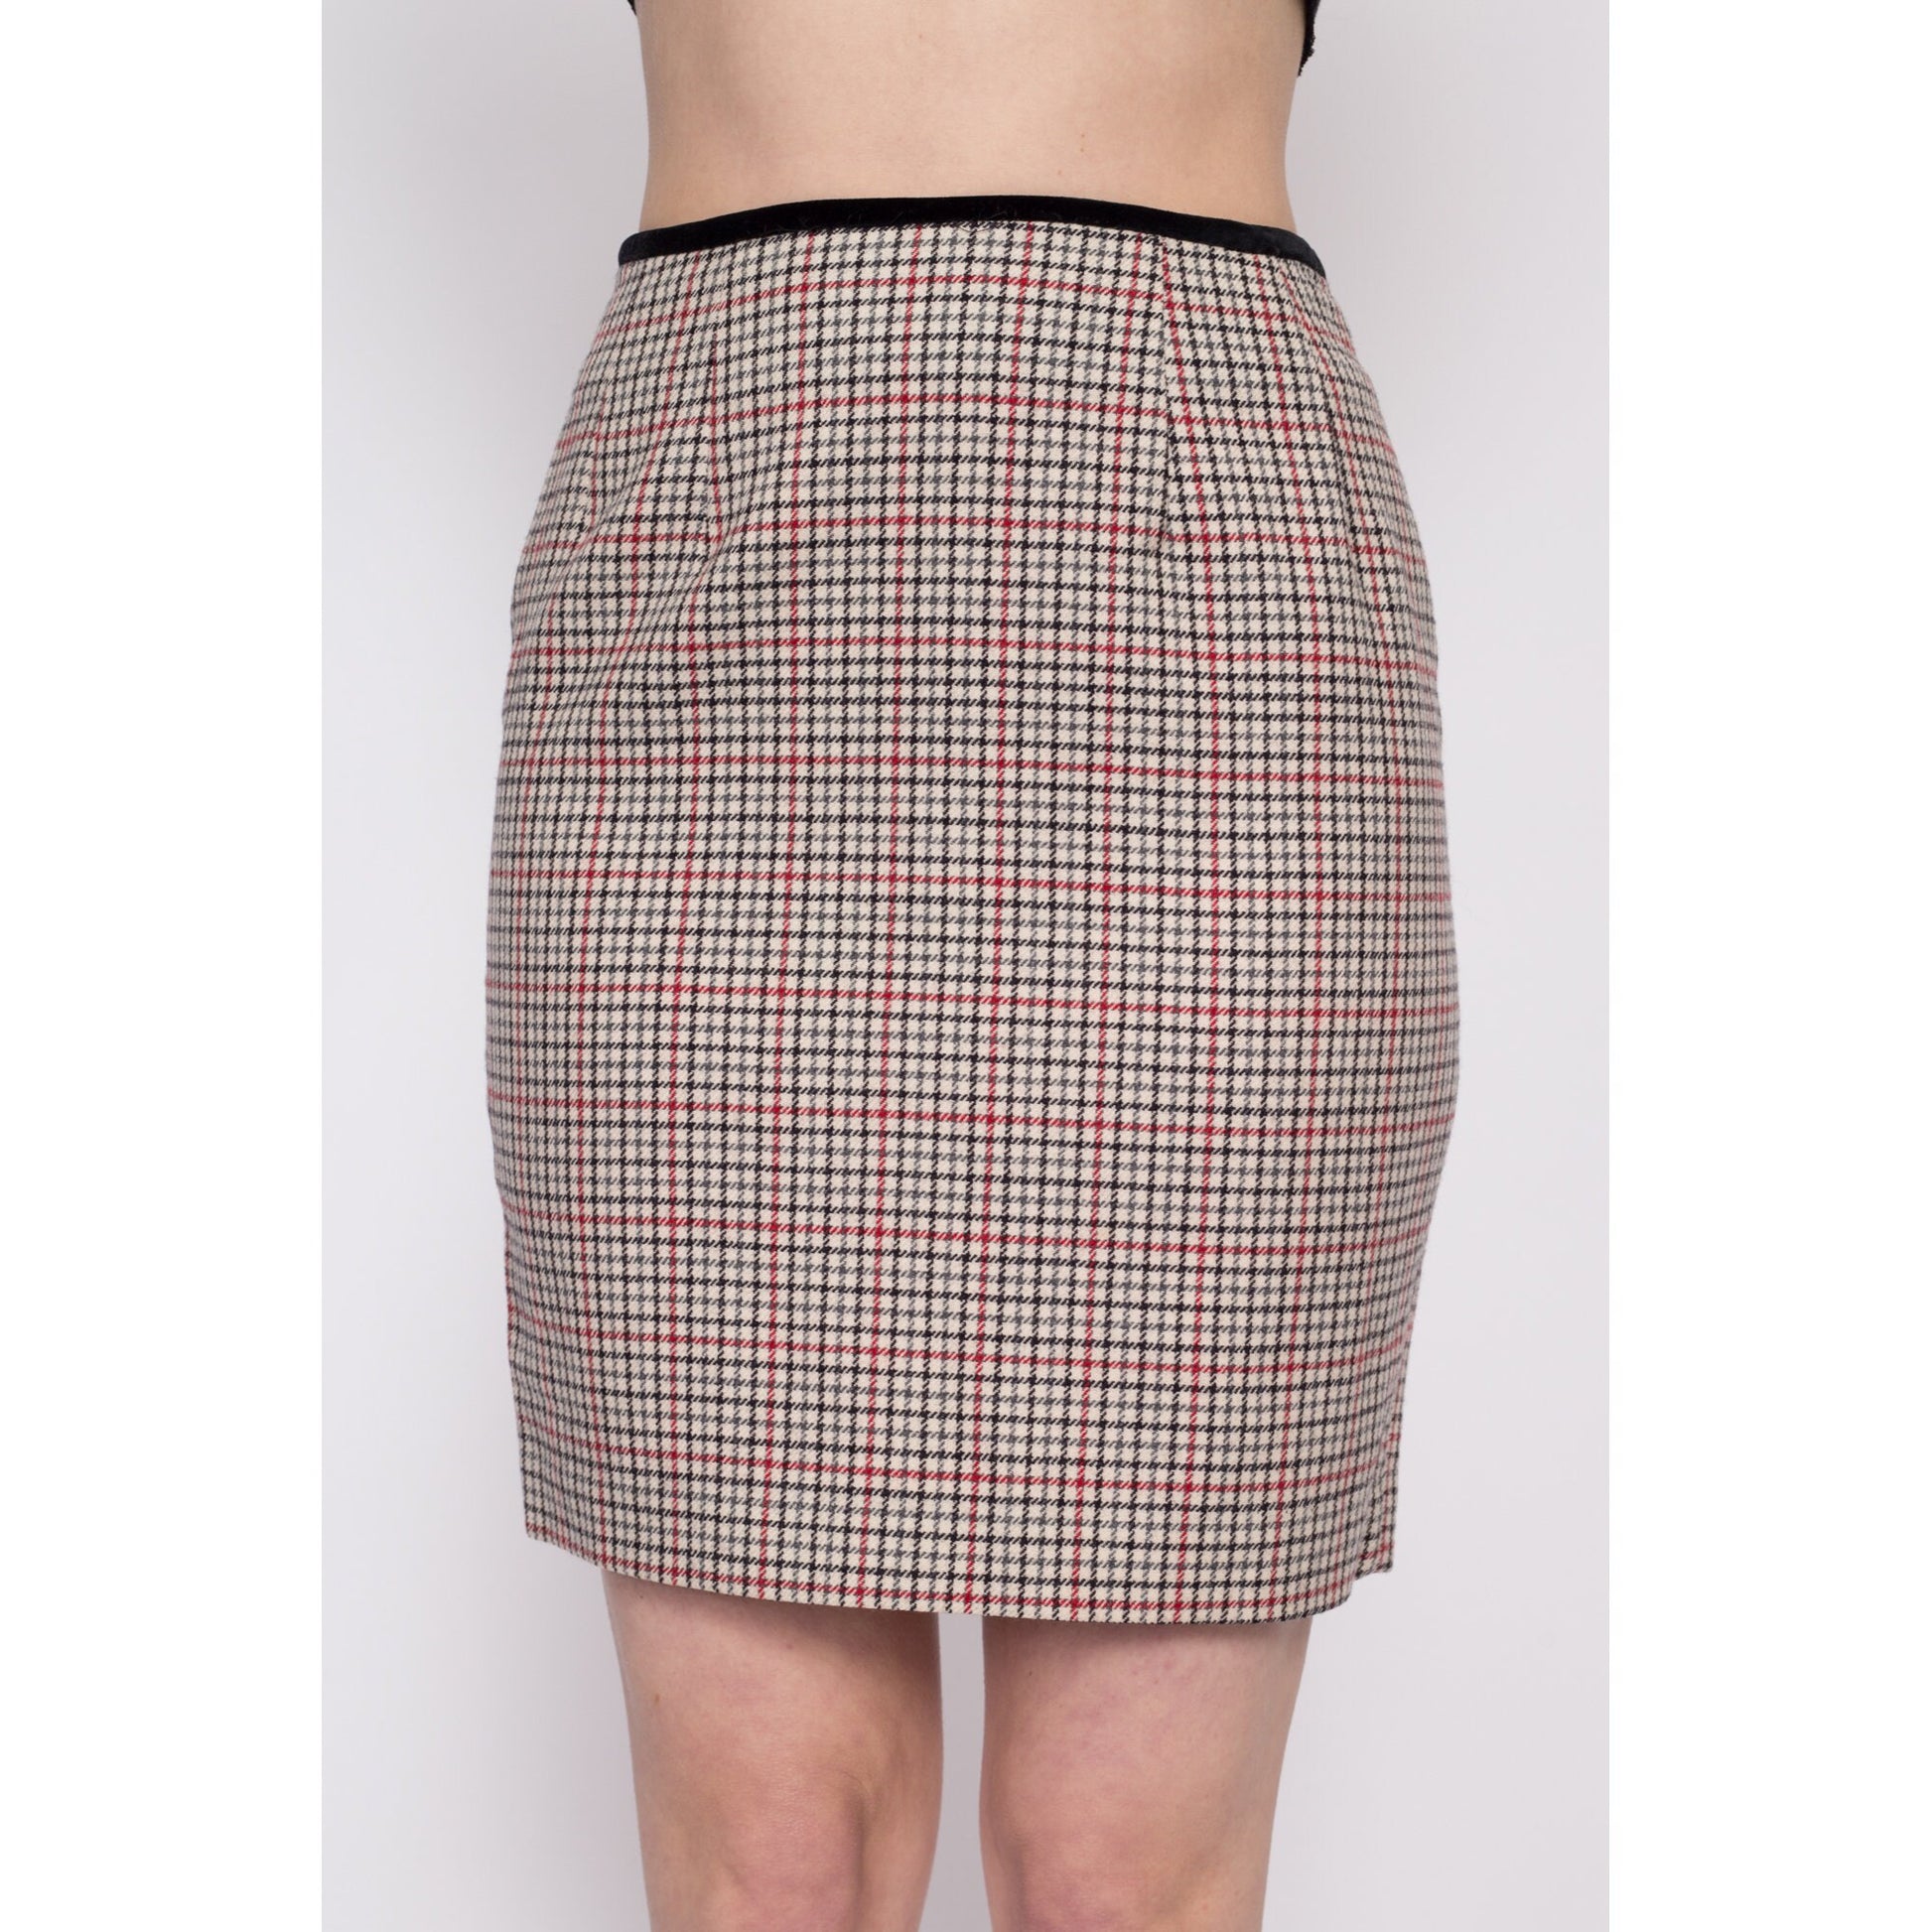 90s Plaid Wool Mini Pencil Skirt - Small, 27" | Vintage Velvet Trim Fitted High Waisted Preppy Schoolgirl Miniskirt